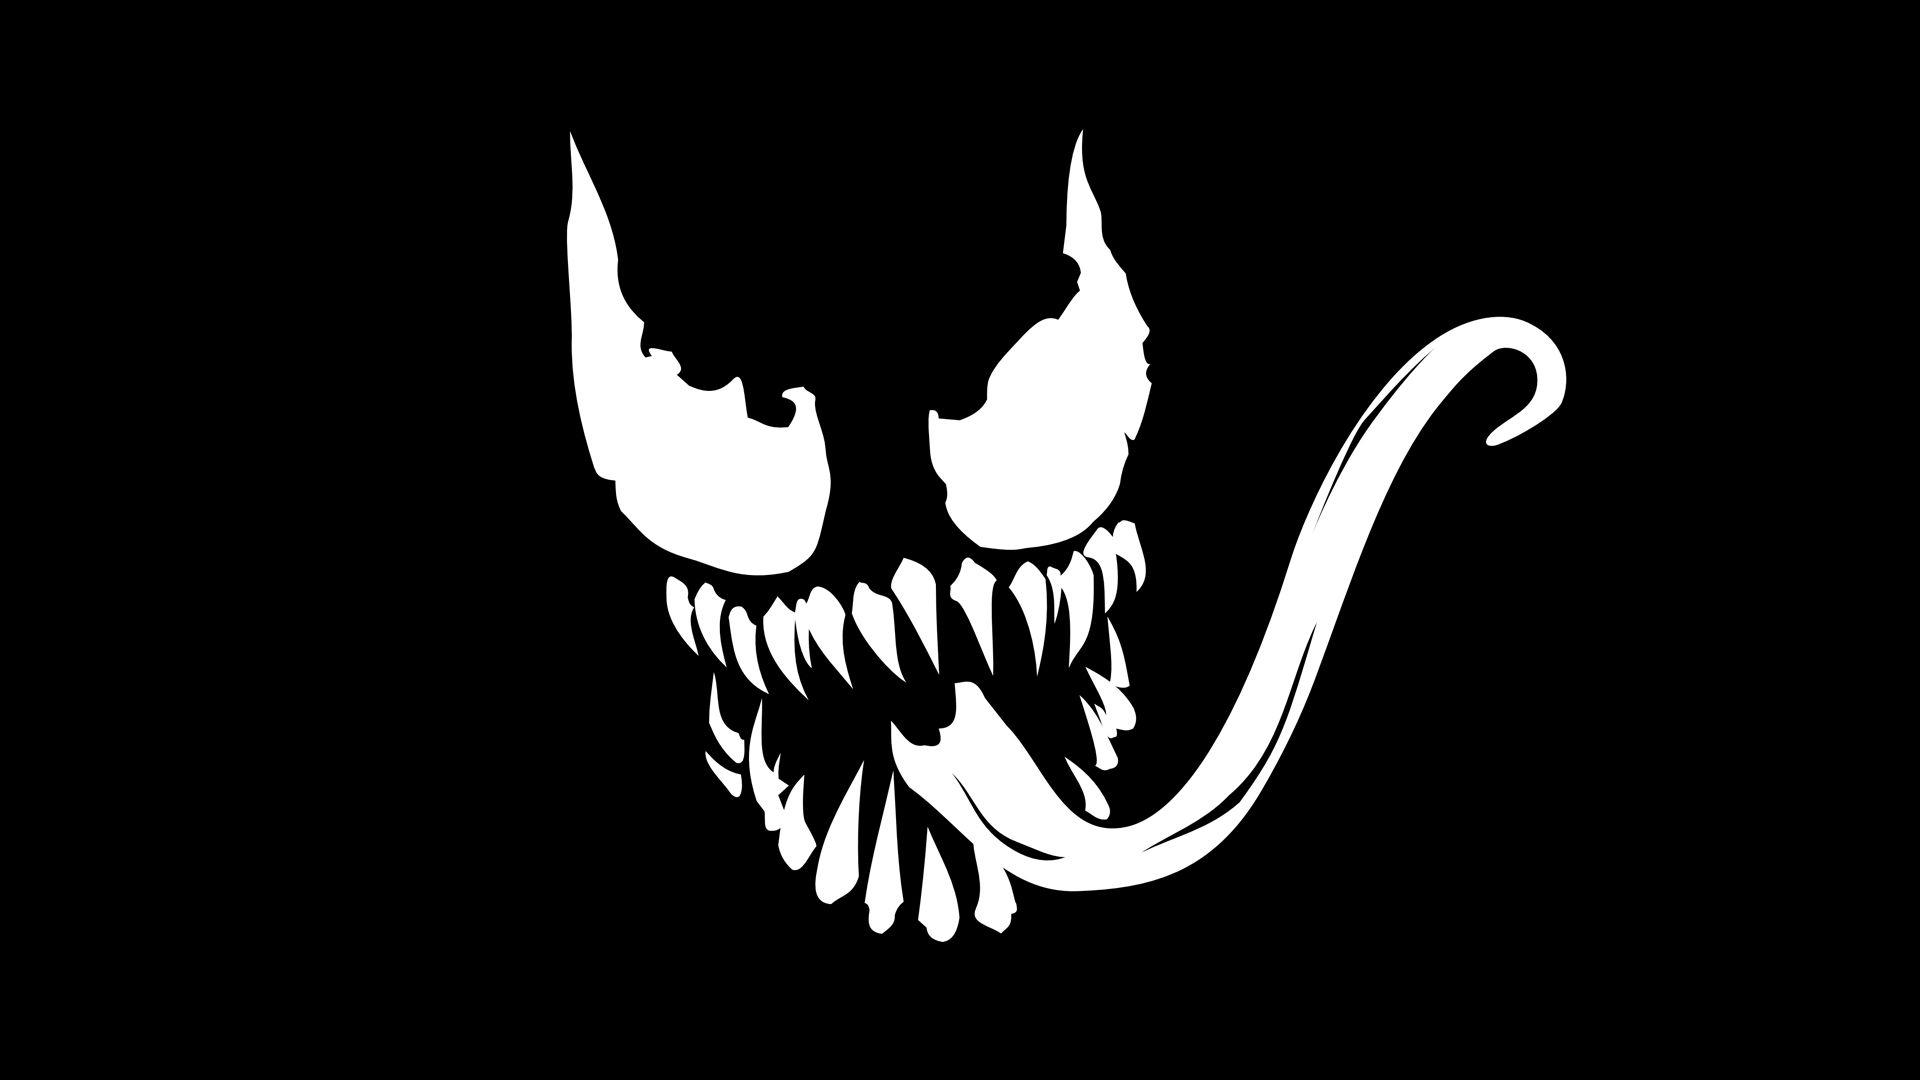 Venom Marvel Logo with Dark Background Wallpaper. Wallpaper